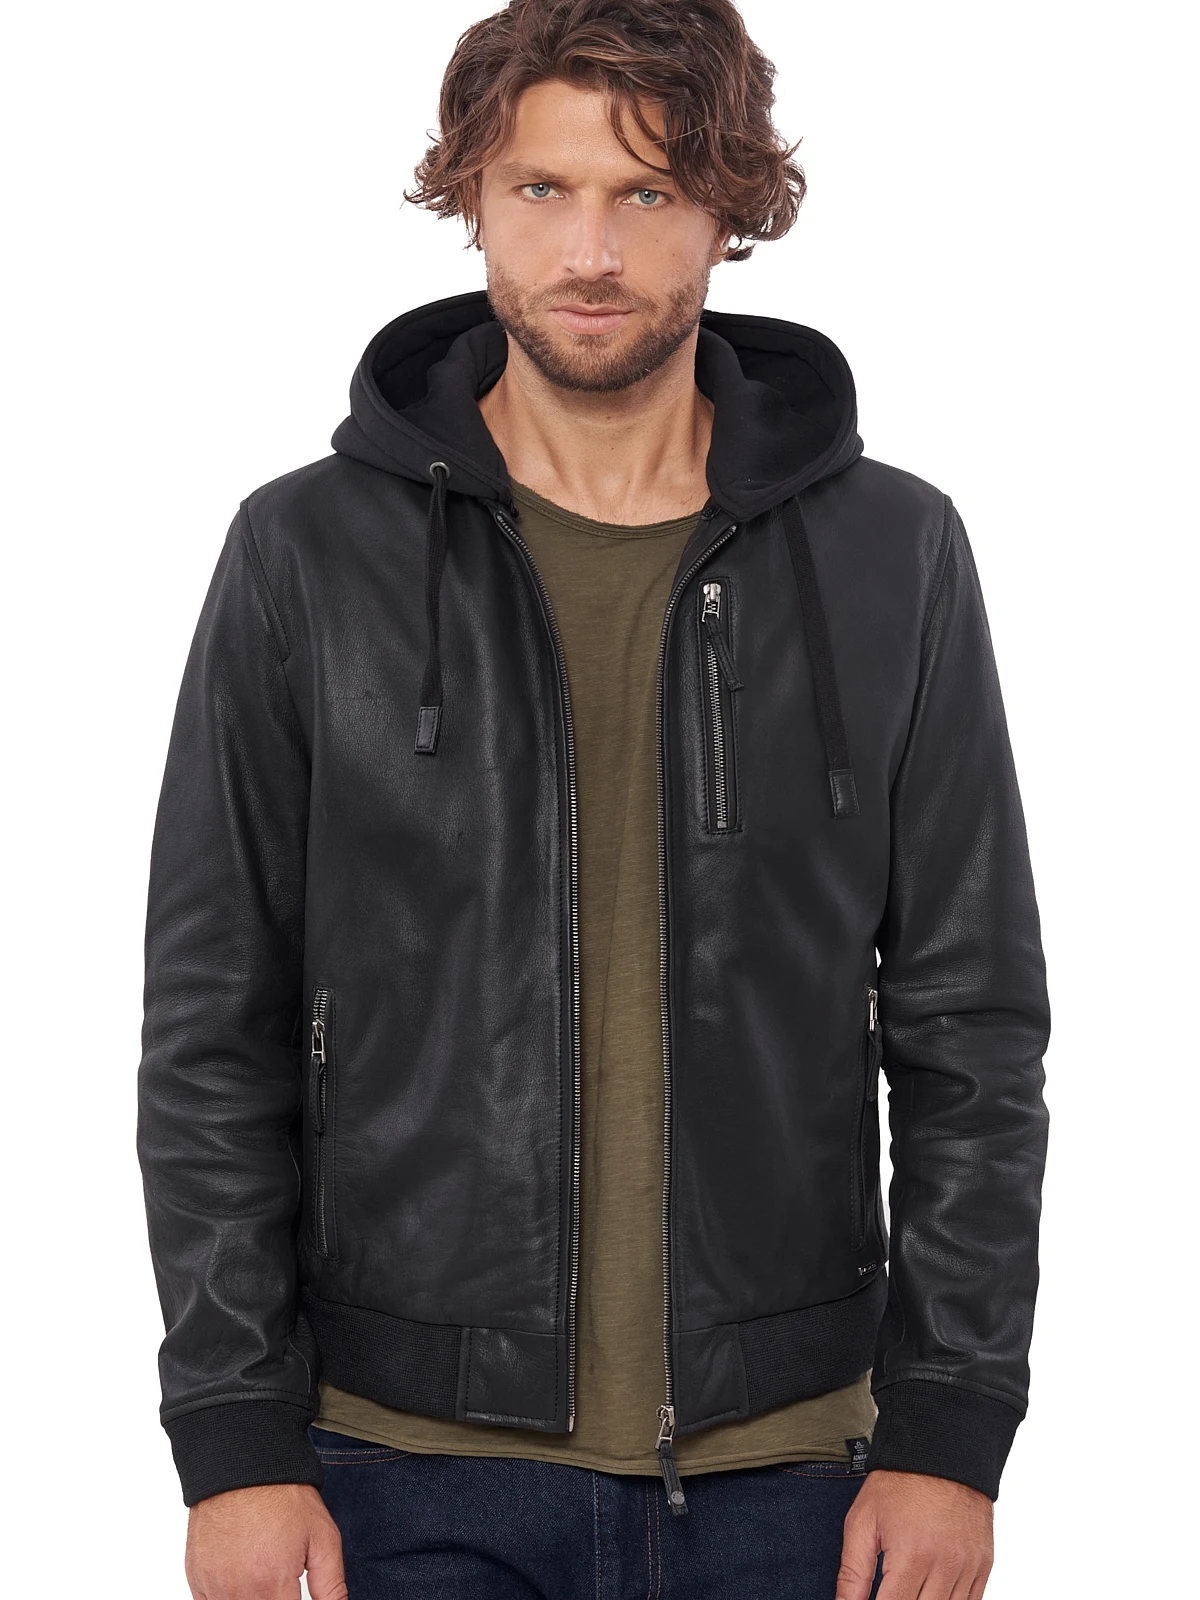 VAINAS European Brand Mens Premium Buffalo Leather jacket for men Winter Real  leather Motorcycle jackets Biker jackets Sugar юбка sugar brand